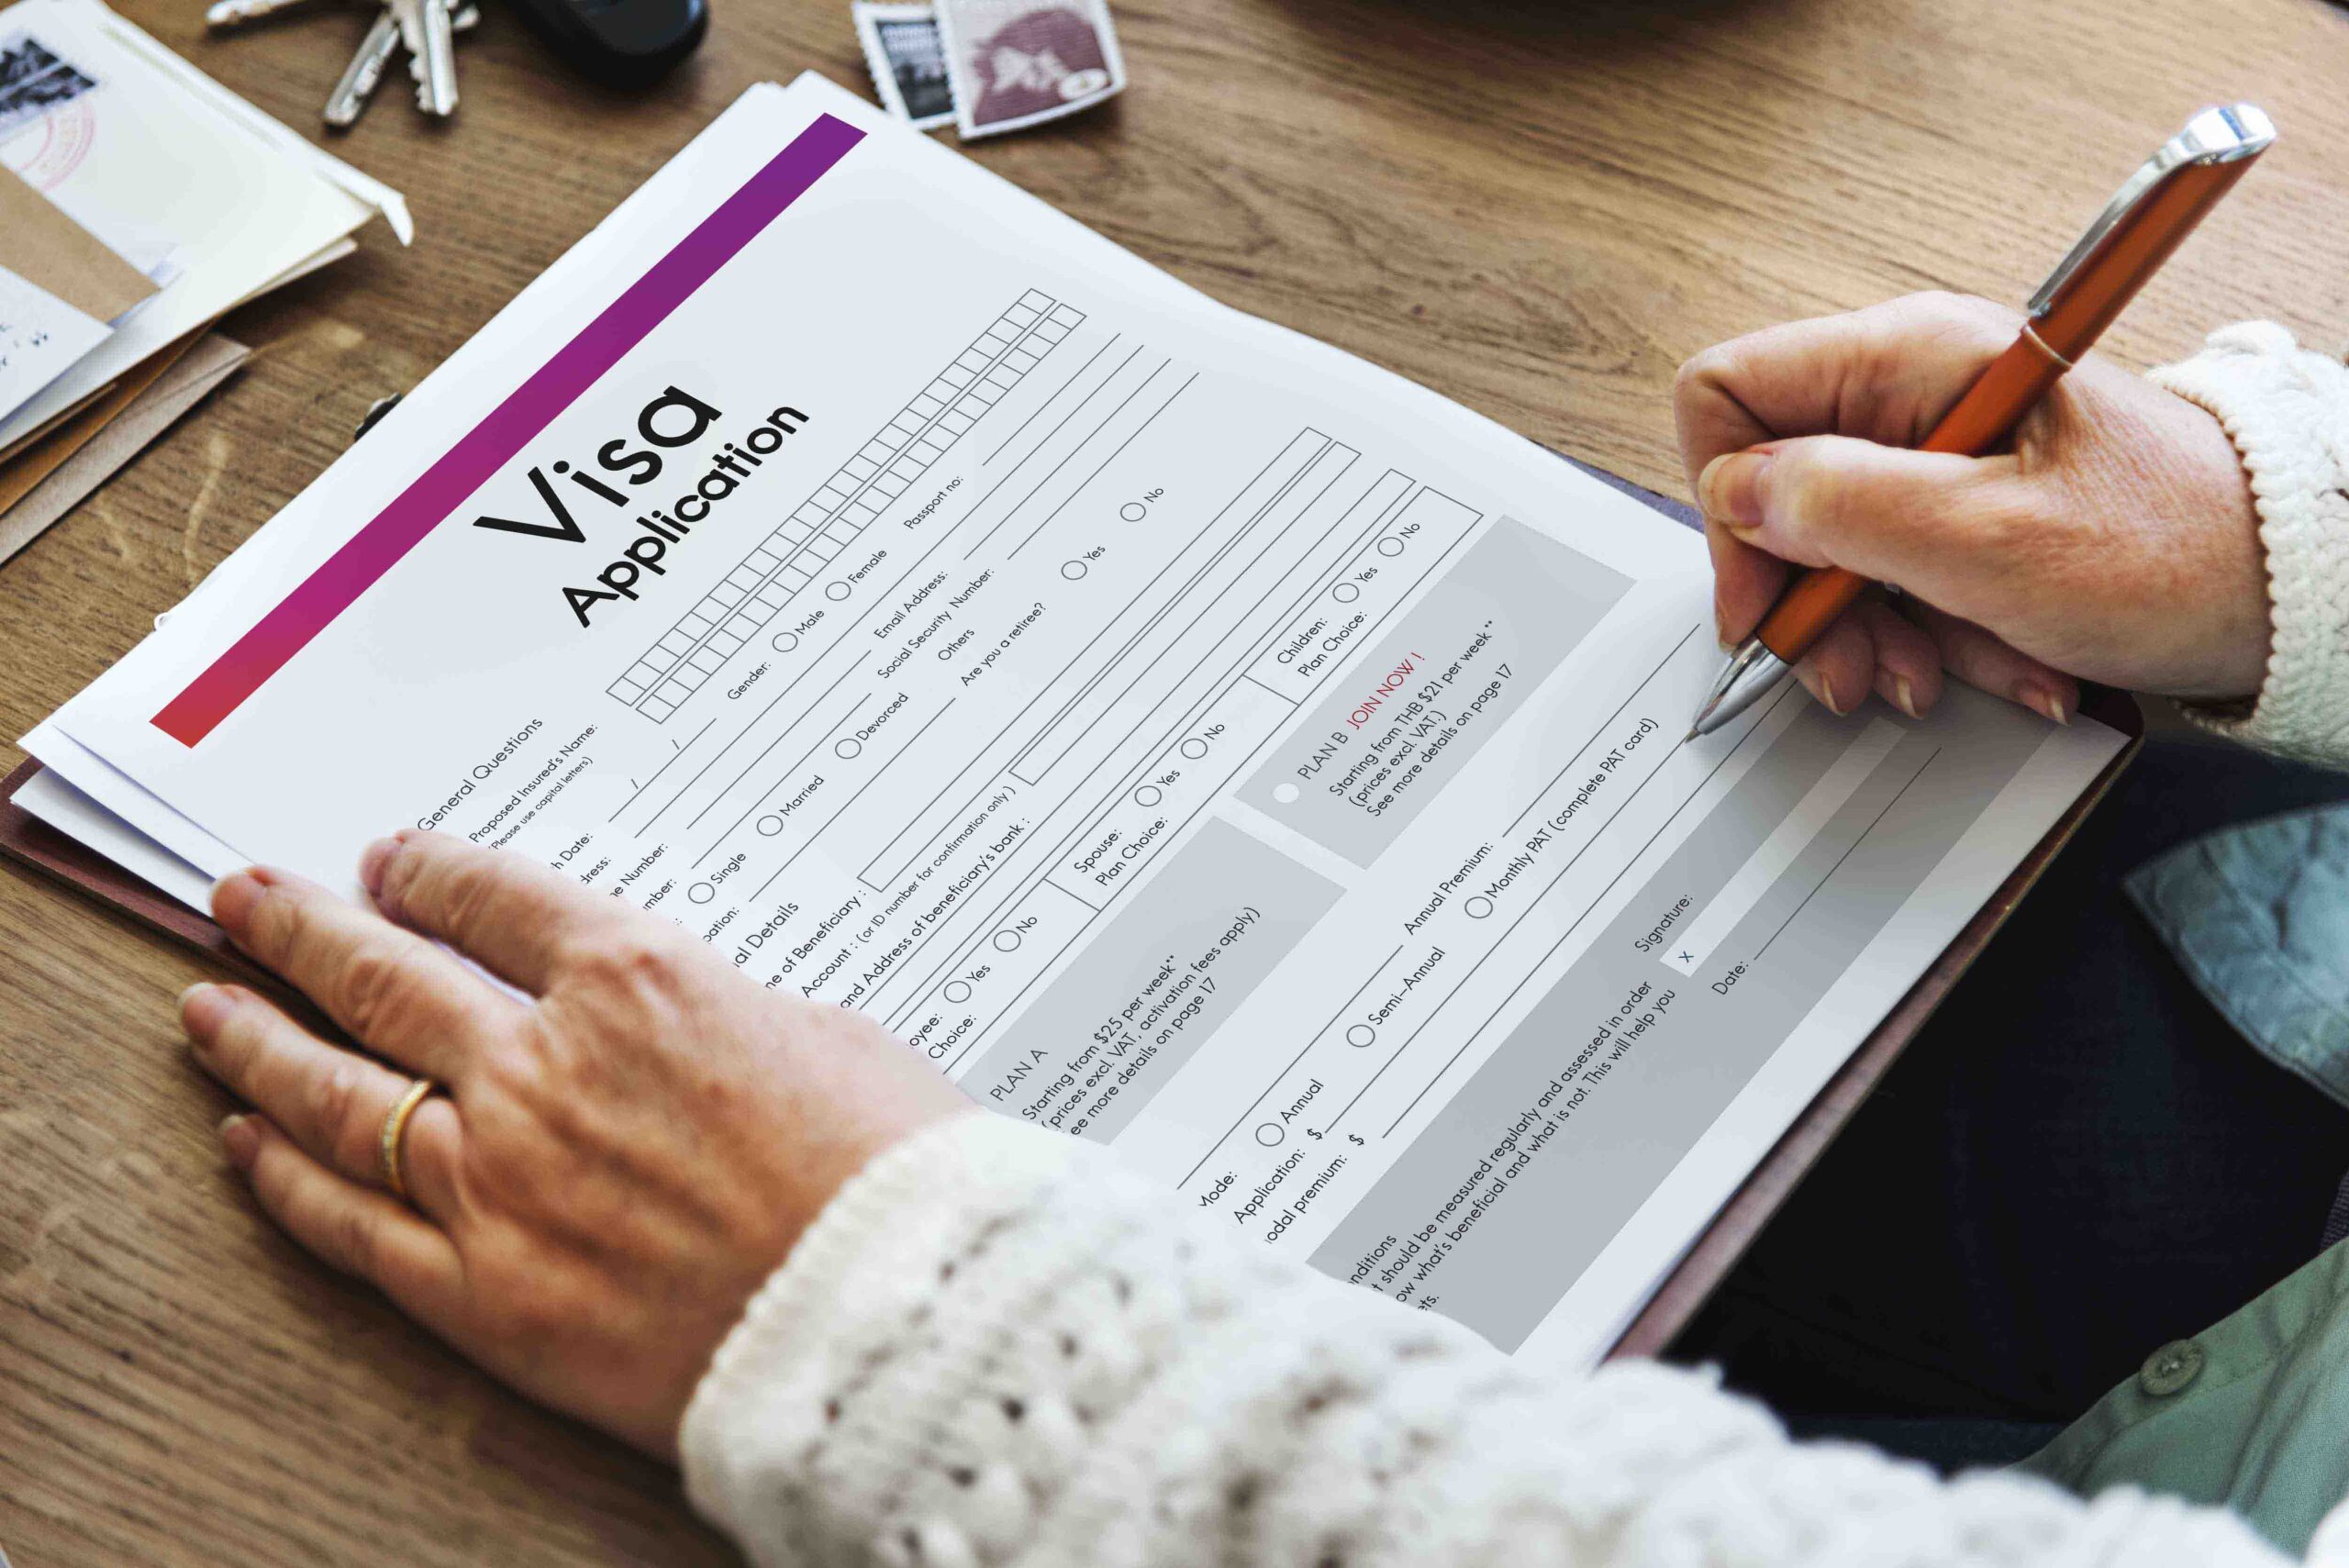 COMESA to investigate unfair Visa application processes